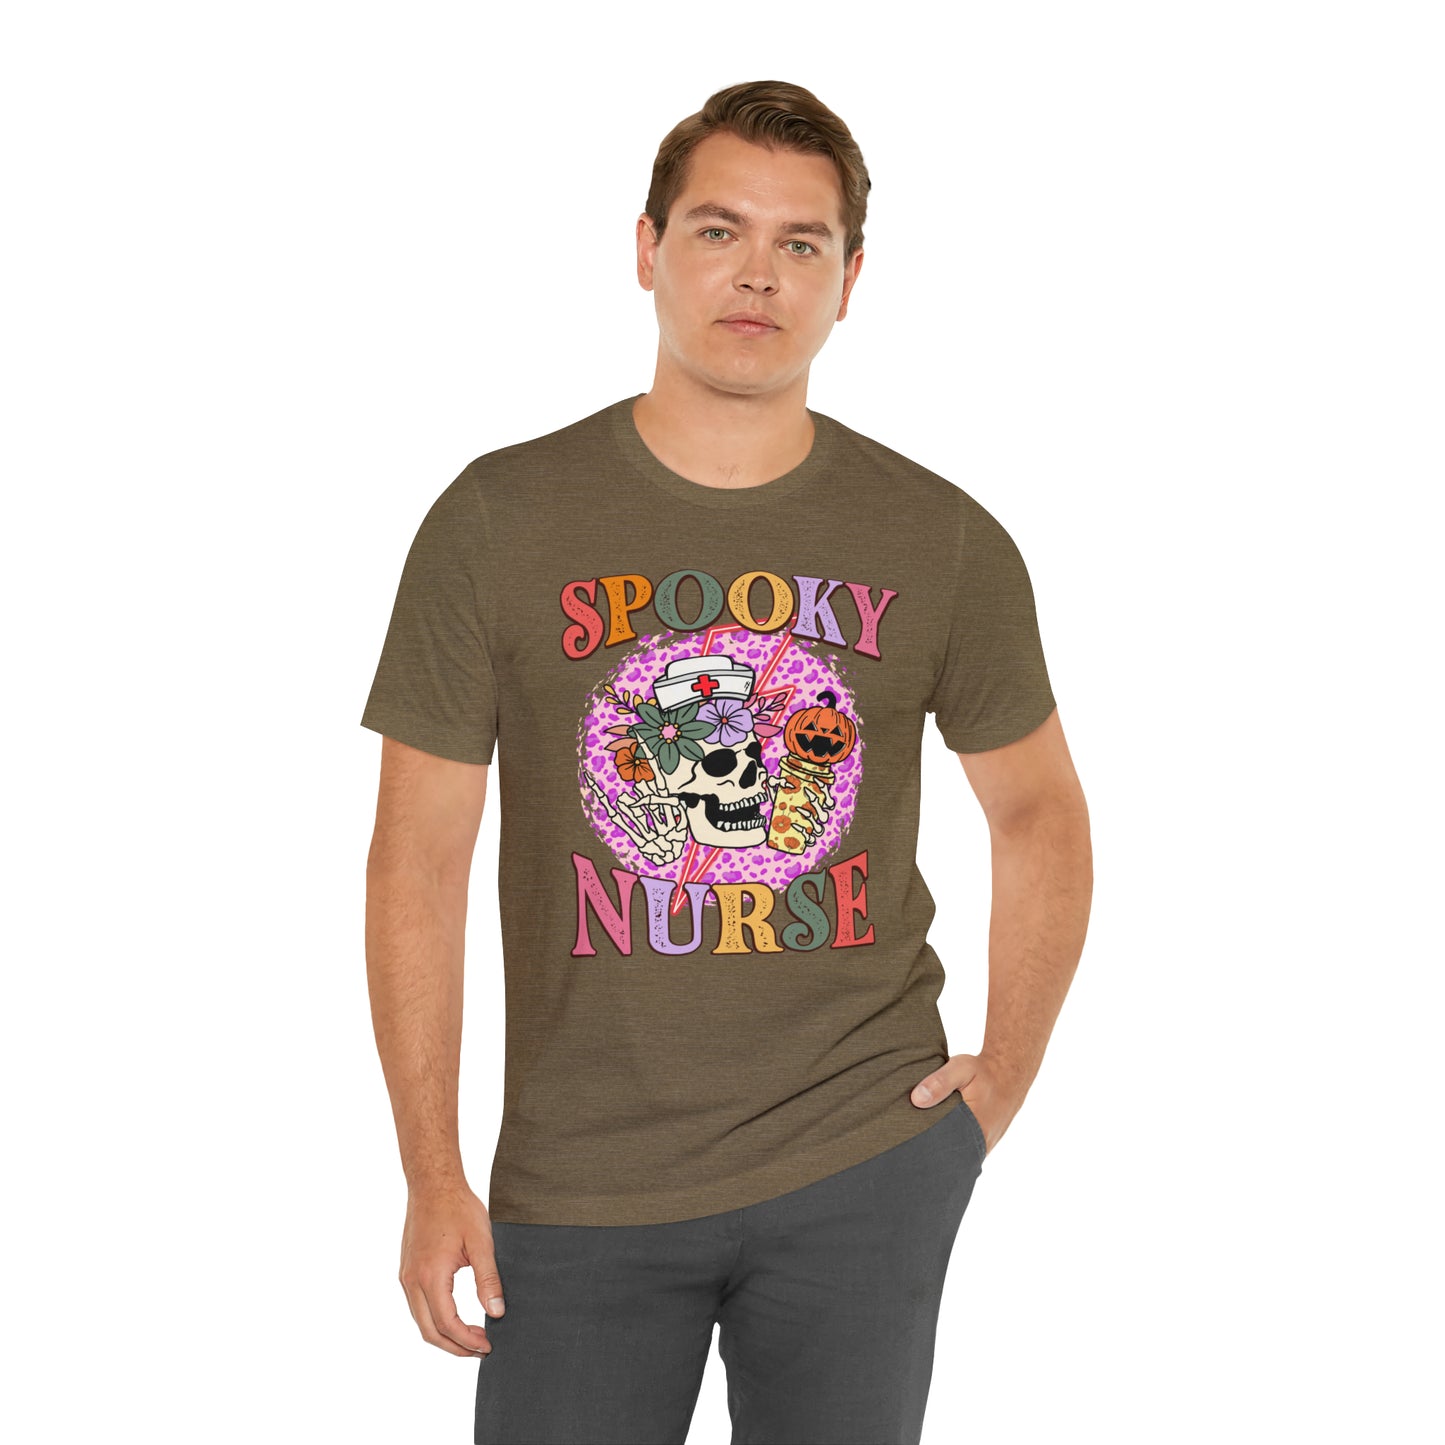 Halloween Nurse Shirt, Spooky Nurse T-shirt, School Nurse shirt, Nurse Life Shirt, Halloween Nurse Outfit, Nursing Student Tee Gifts, T697